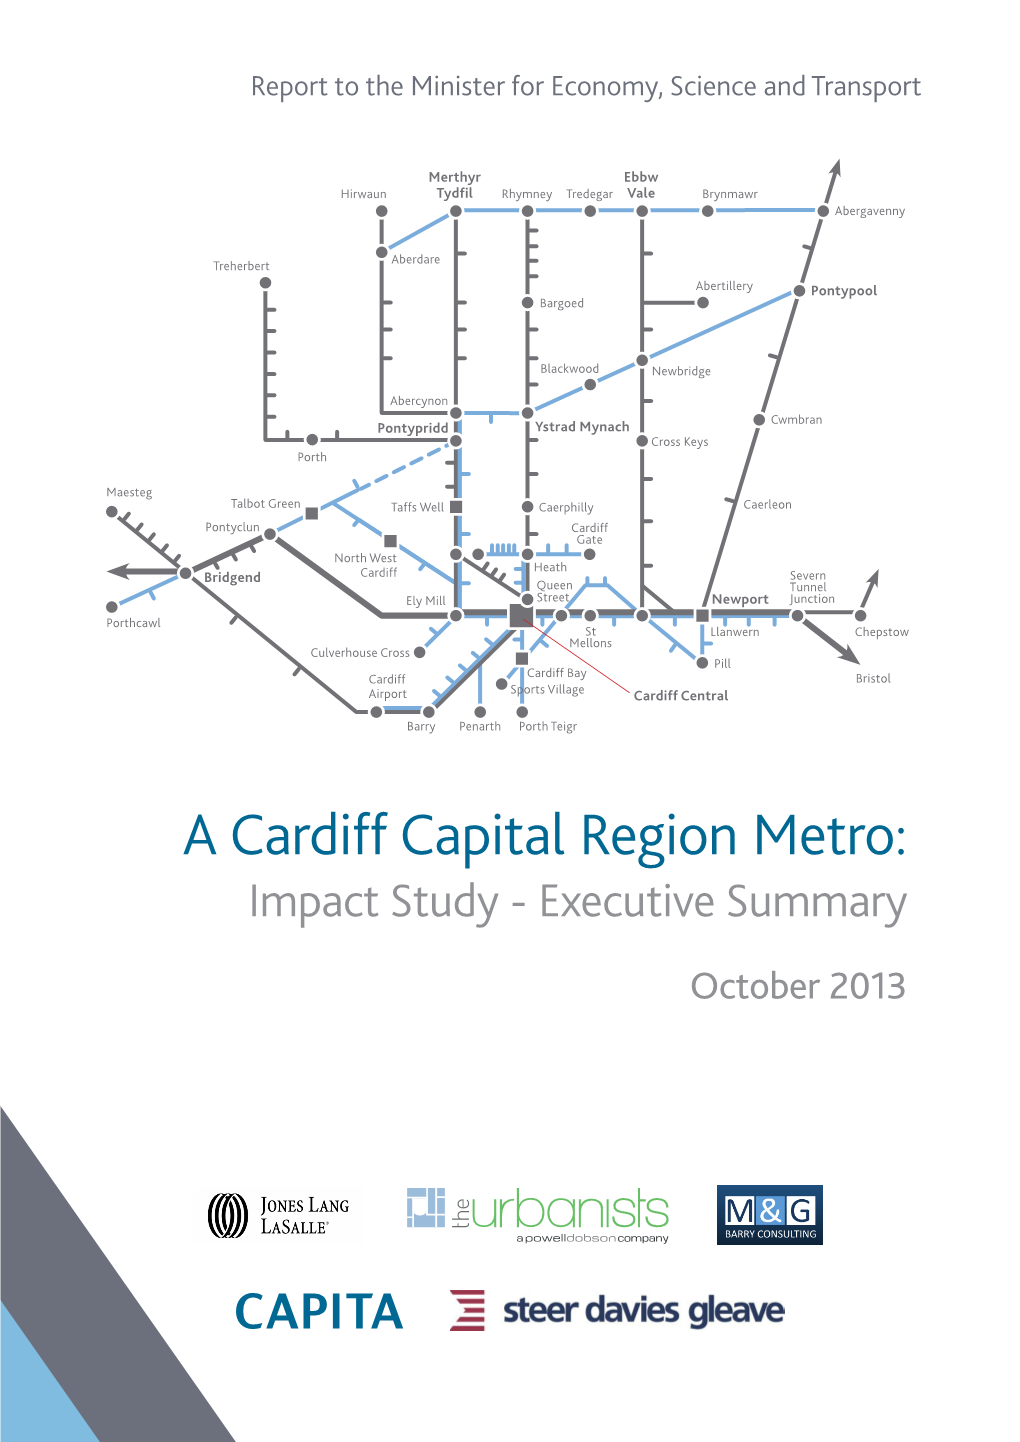 A Cardiff Capital Region Metro: Impact Study - Executive Summary